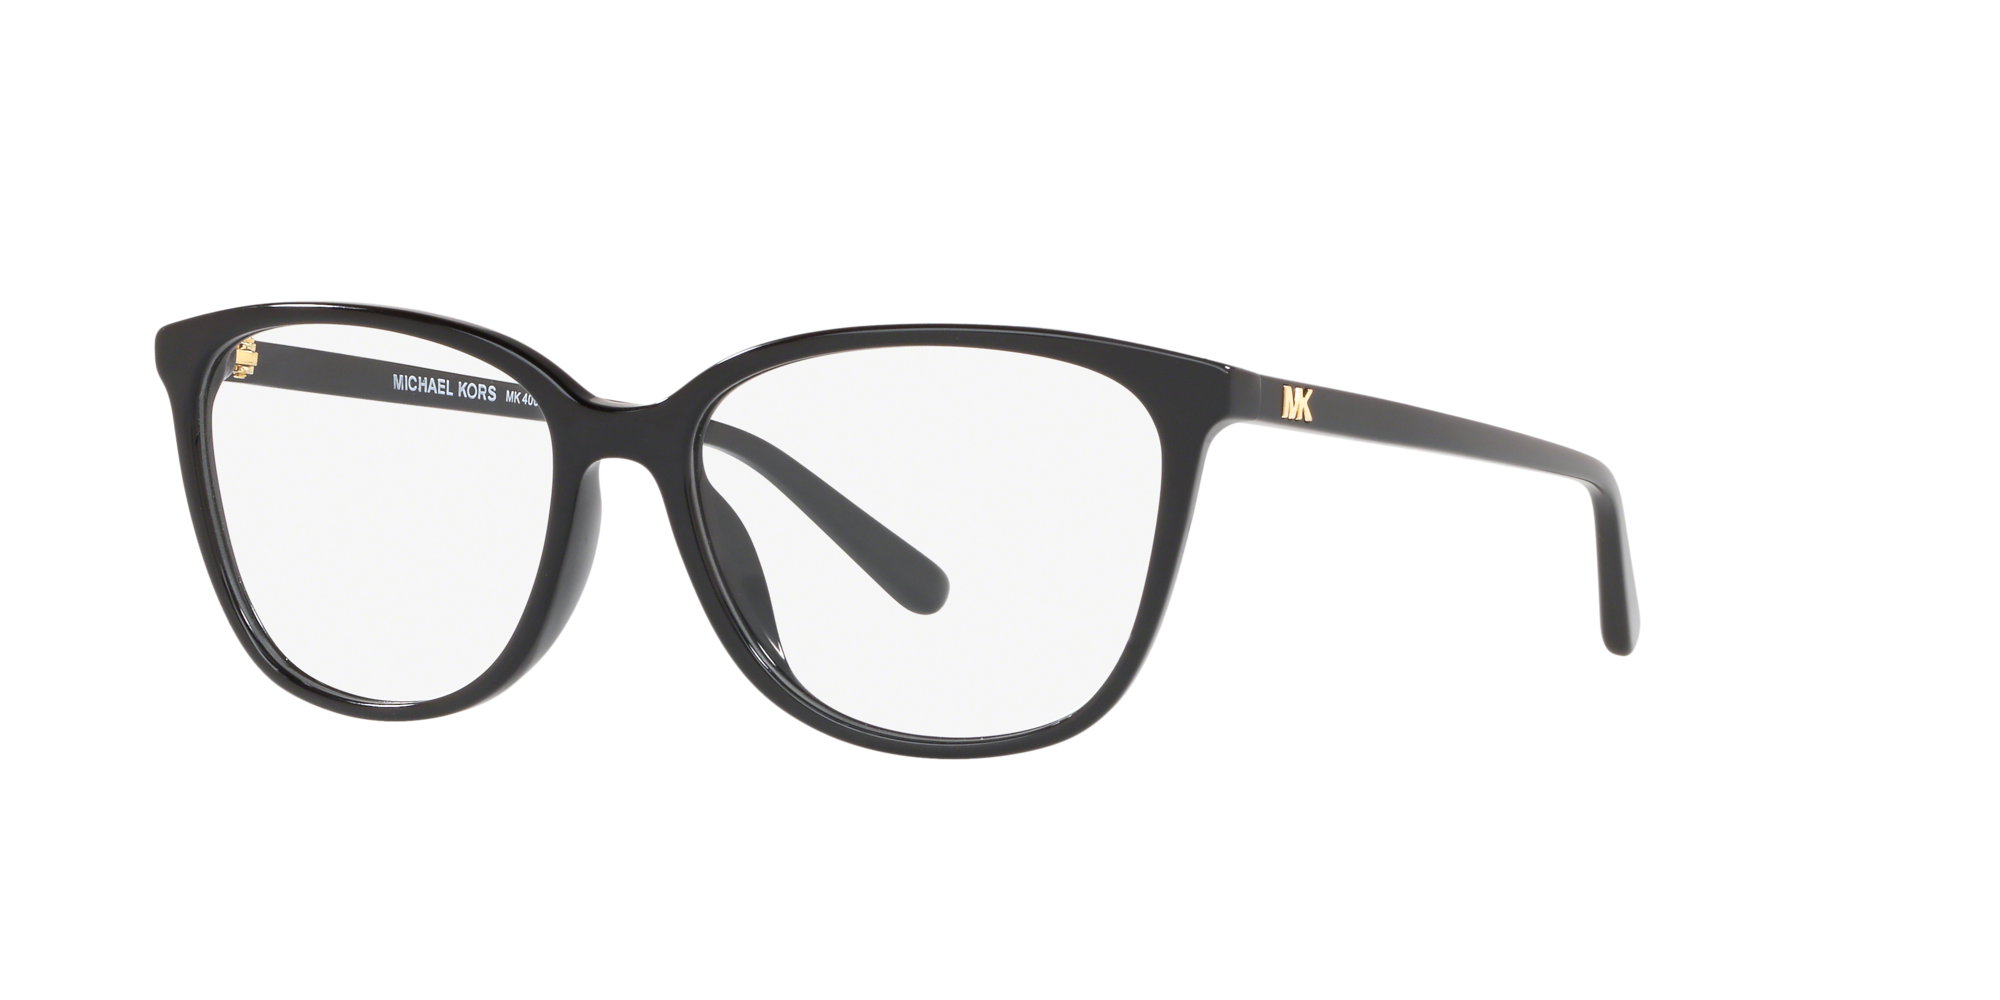 MICHAEL KORS MK 4034 3204 52mm Adrianna V Eyewear FRAMES RX Optical Glasses  New  GGV Eyewear